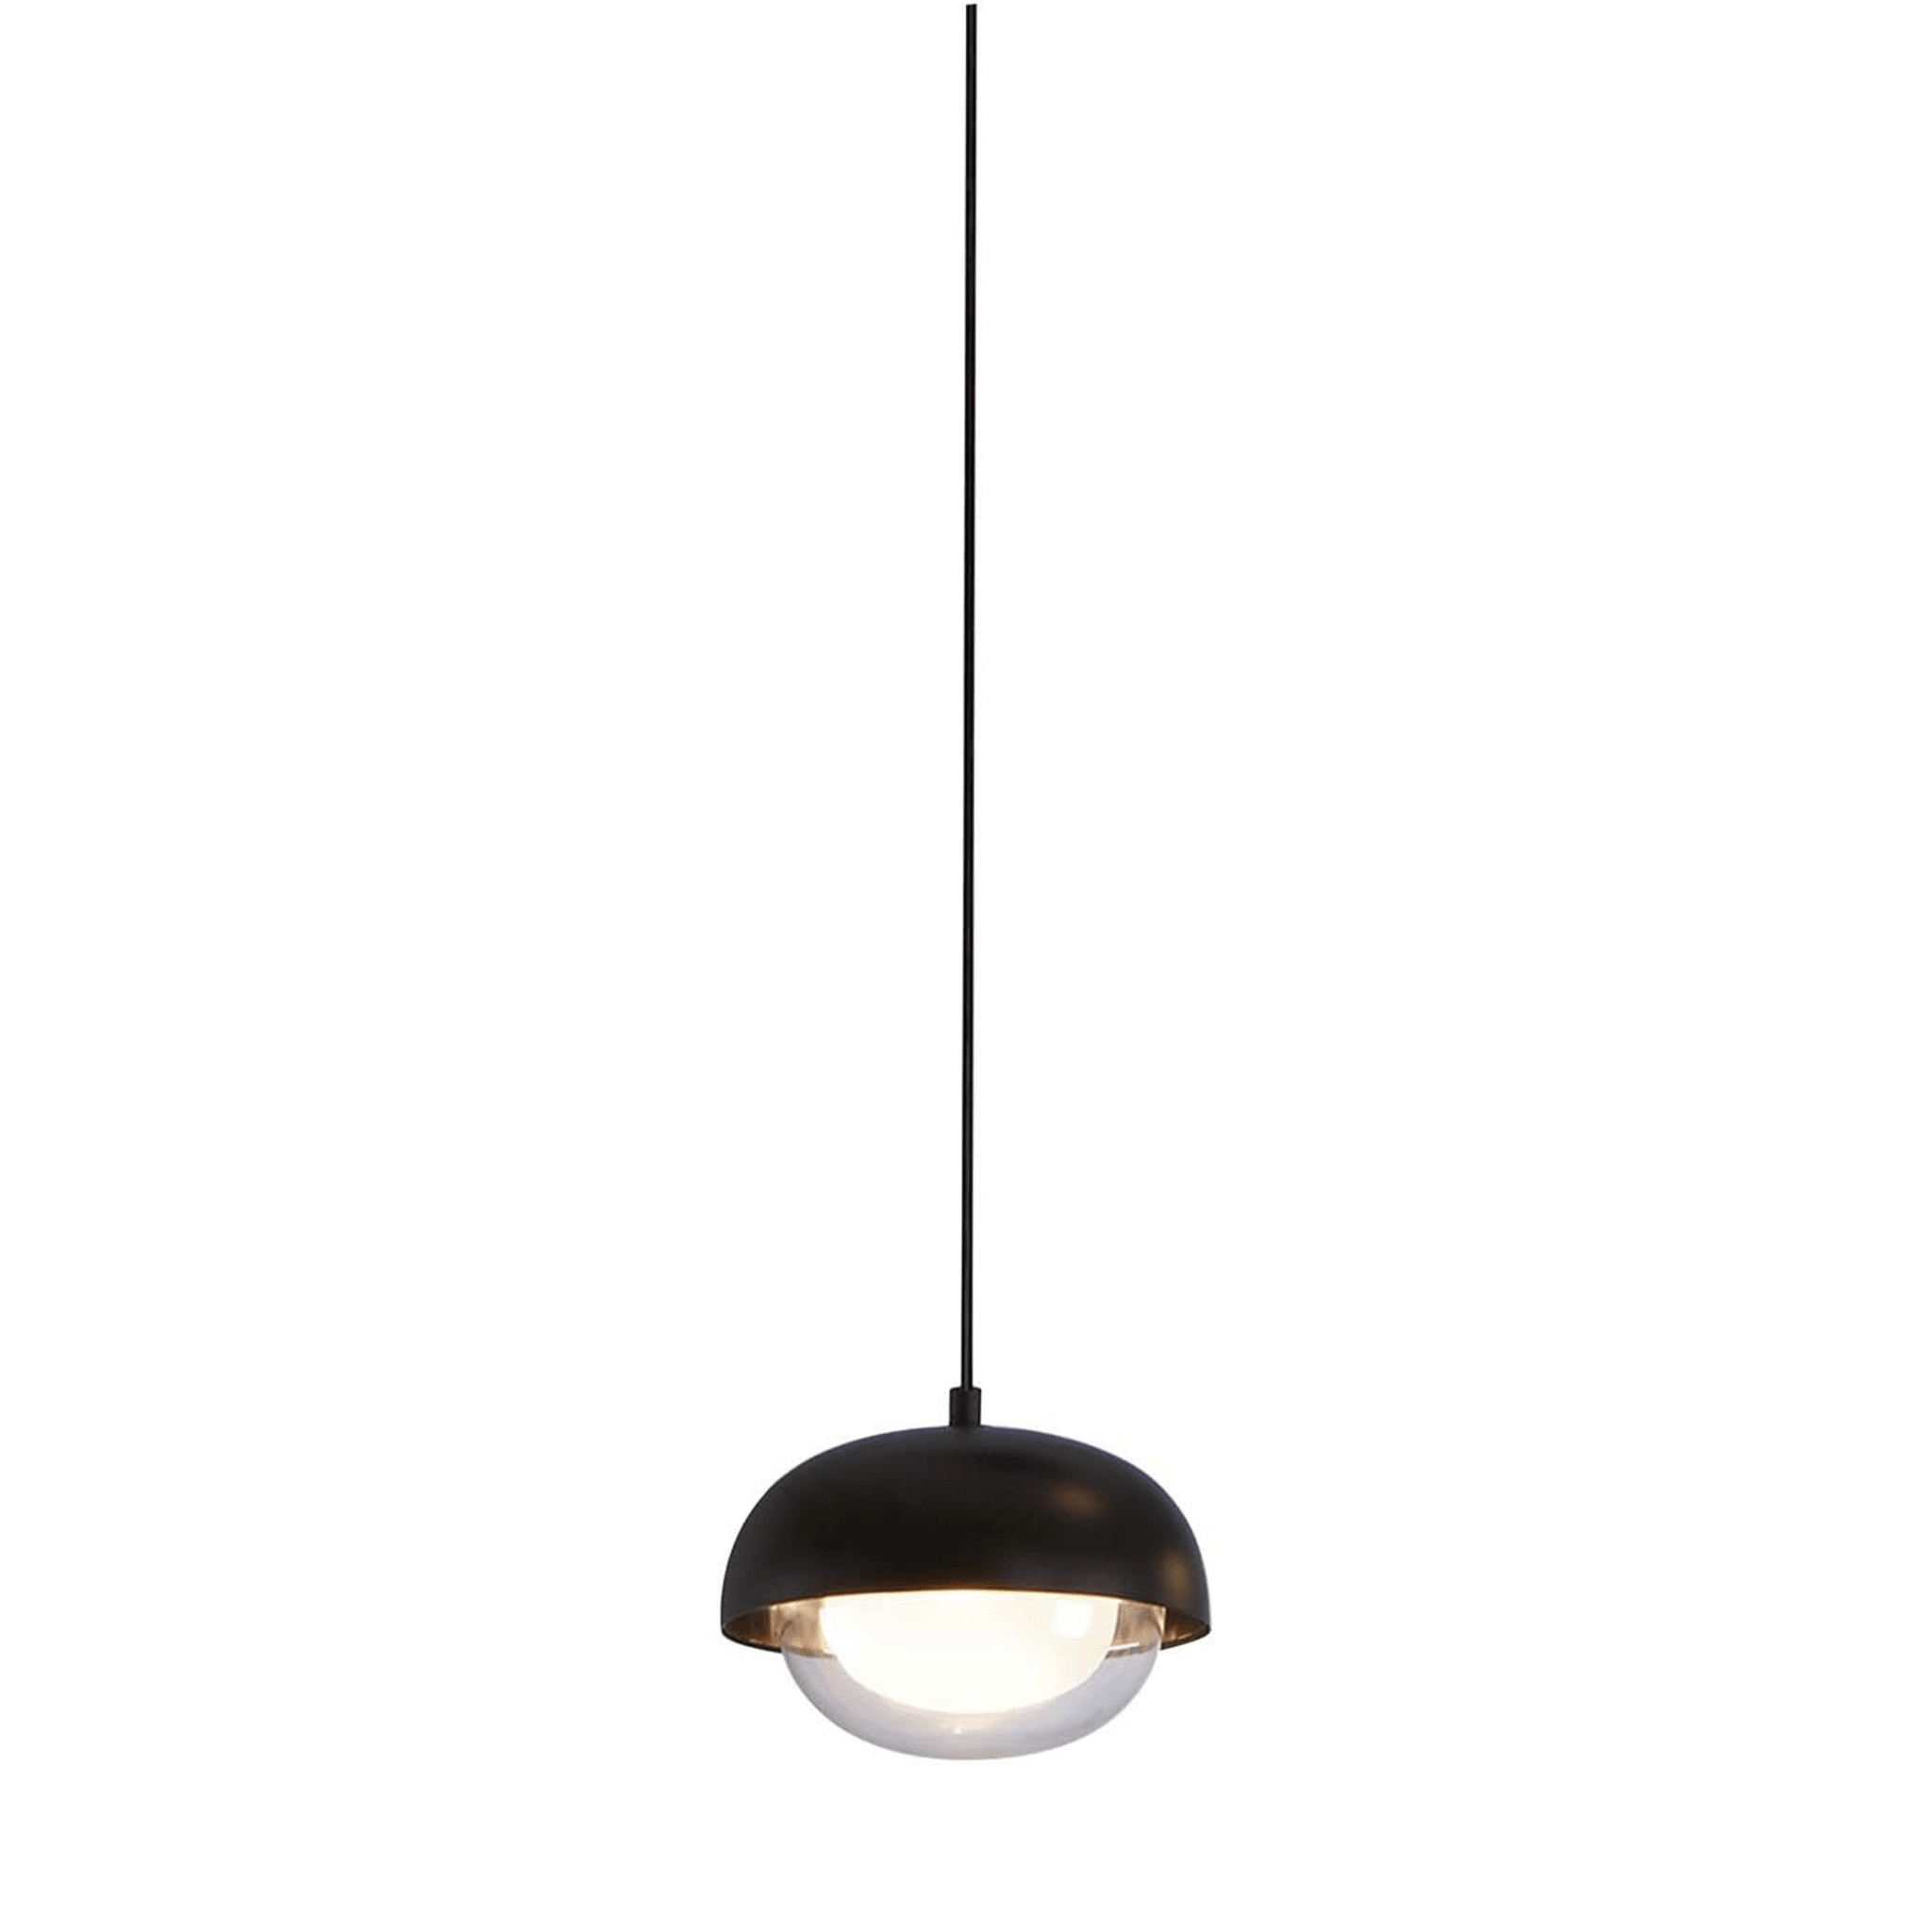 Muse Small Pendant Lamp by Corrado Dotti - Main view